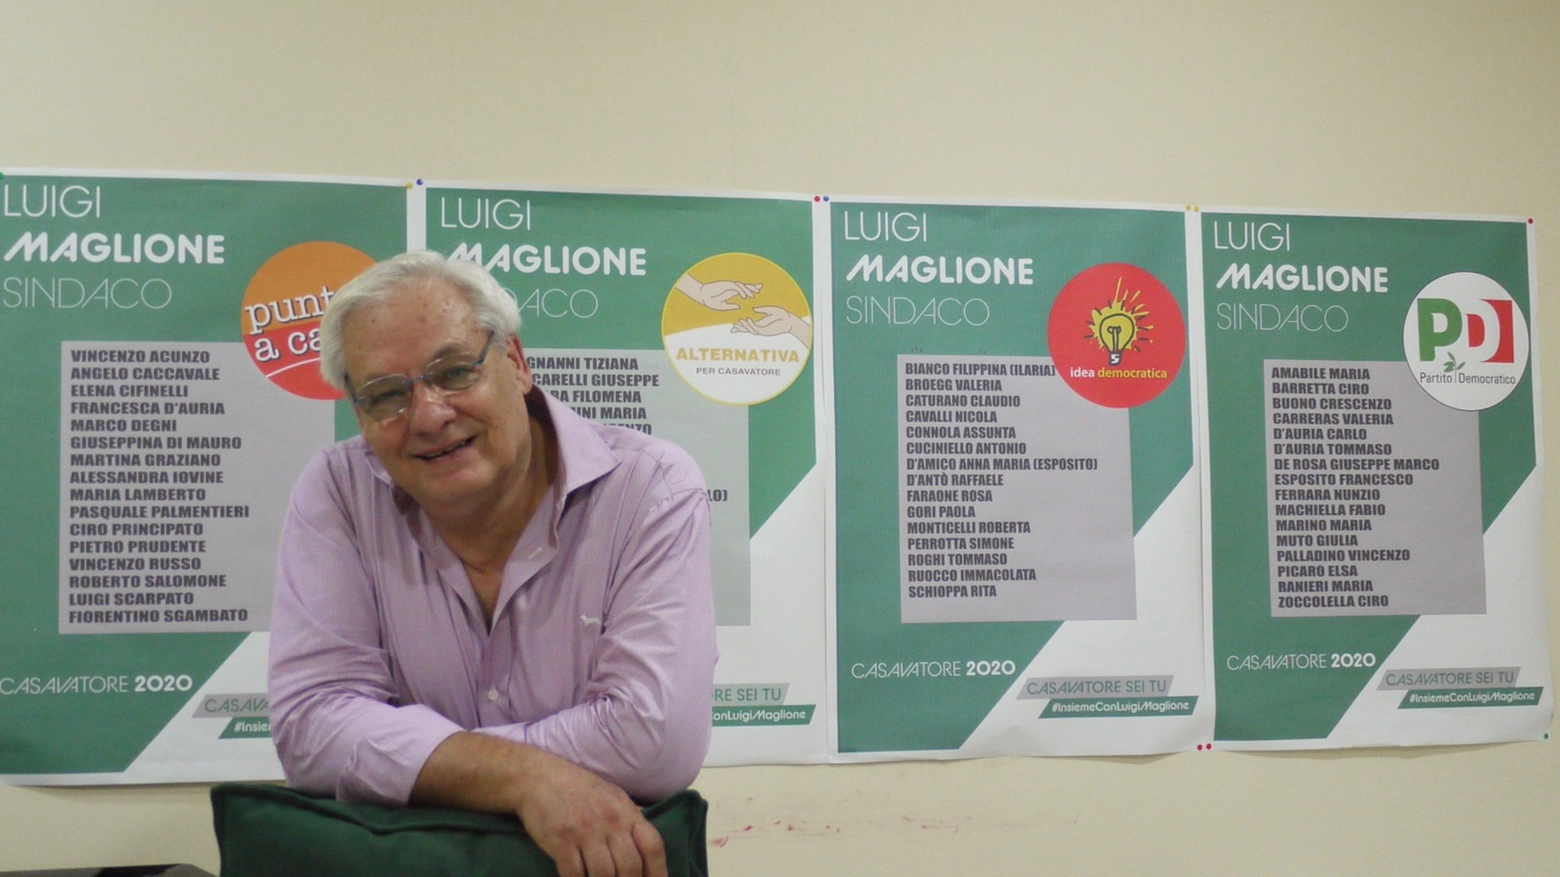 Luigi Maglione sindaco di Casavatore